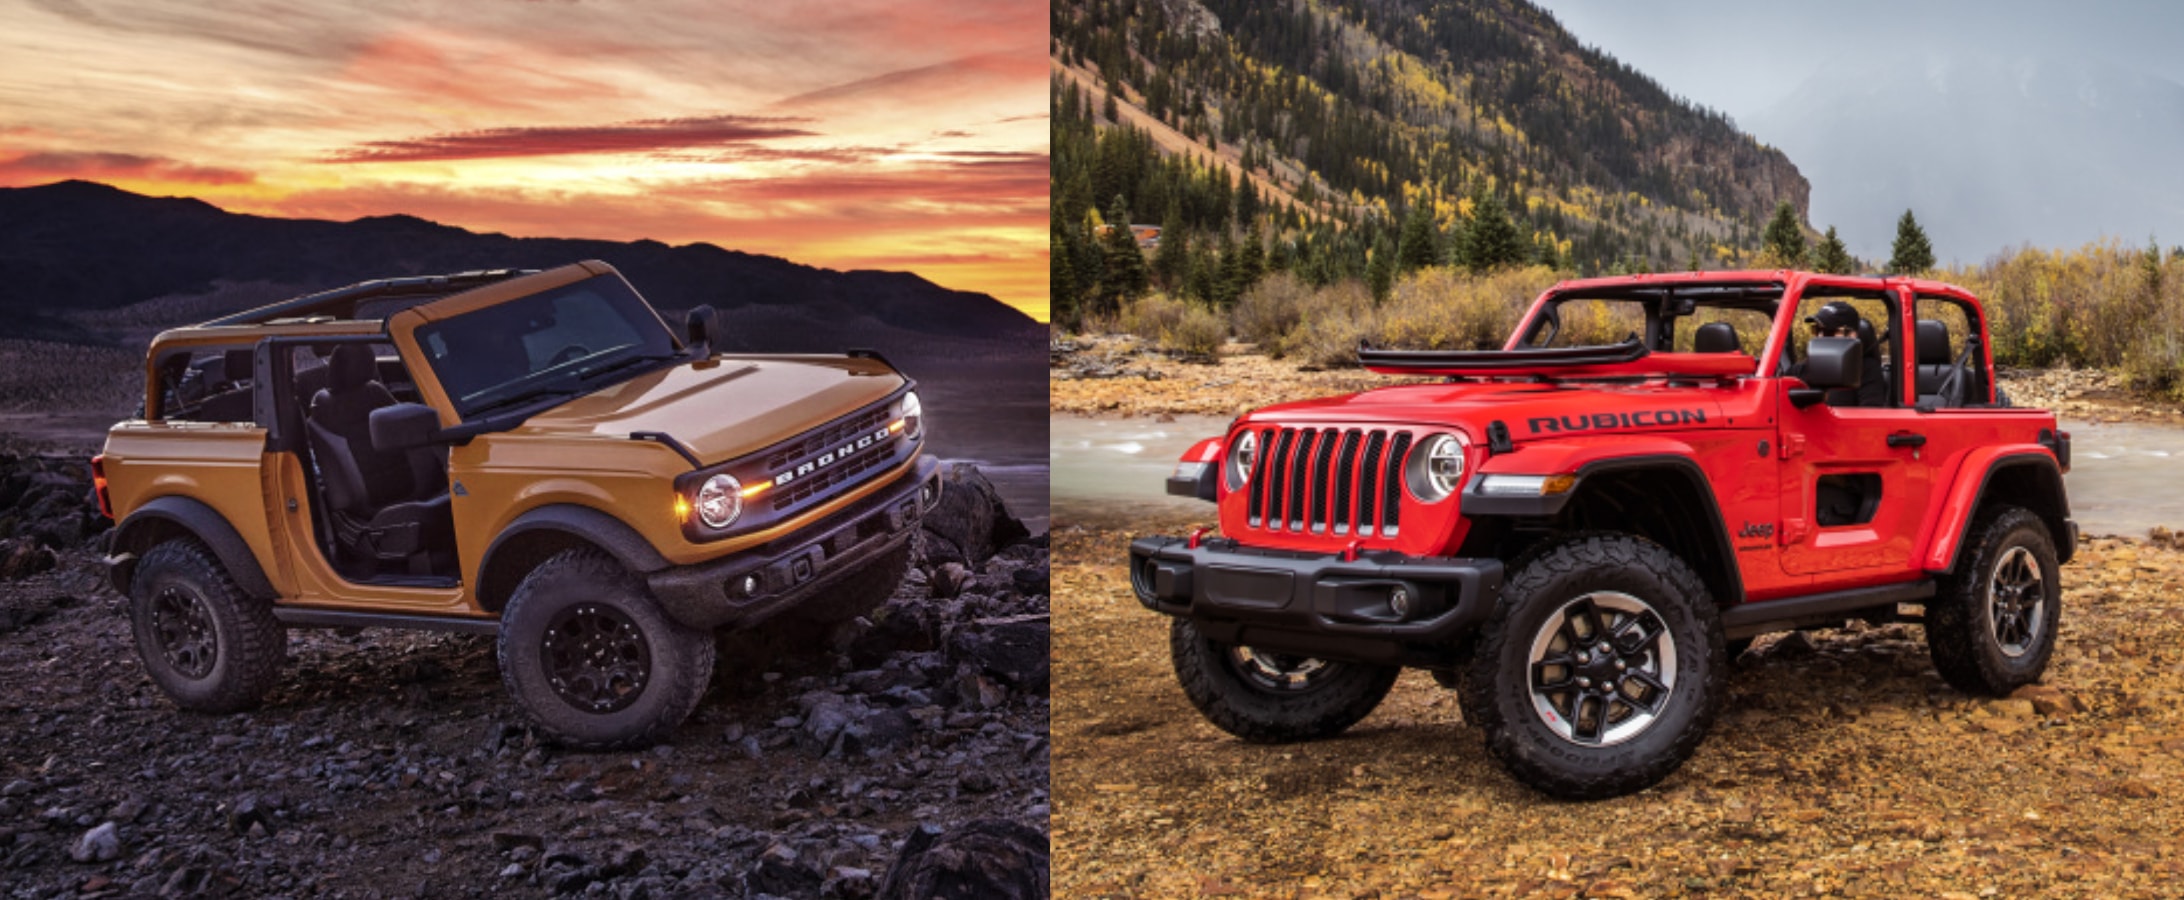 2021 Ford Bronco vs. Jeep Wrangler Comparison: Which One Is Better? -  autoevolution